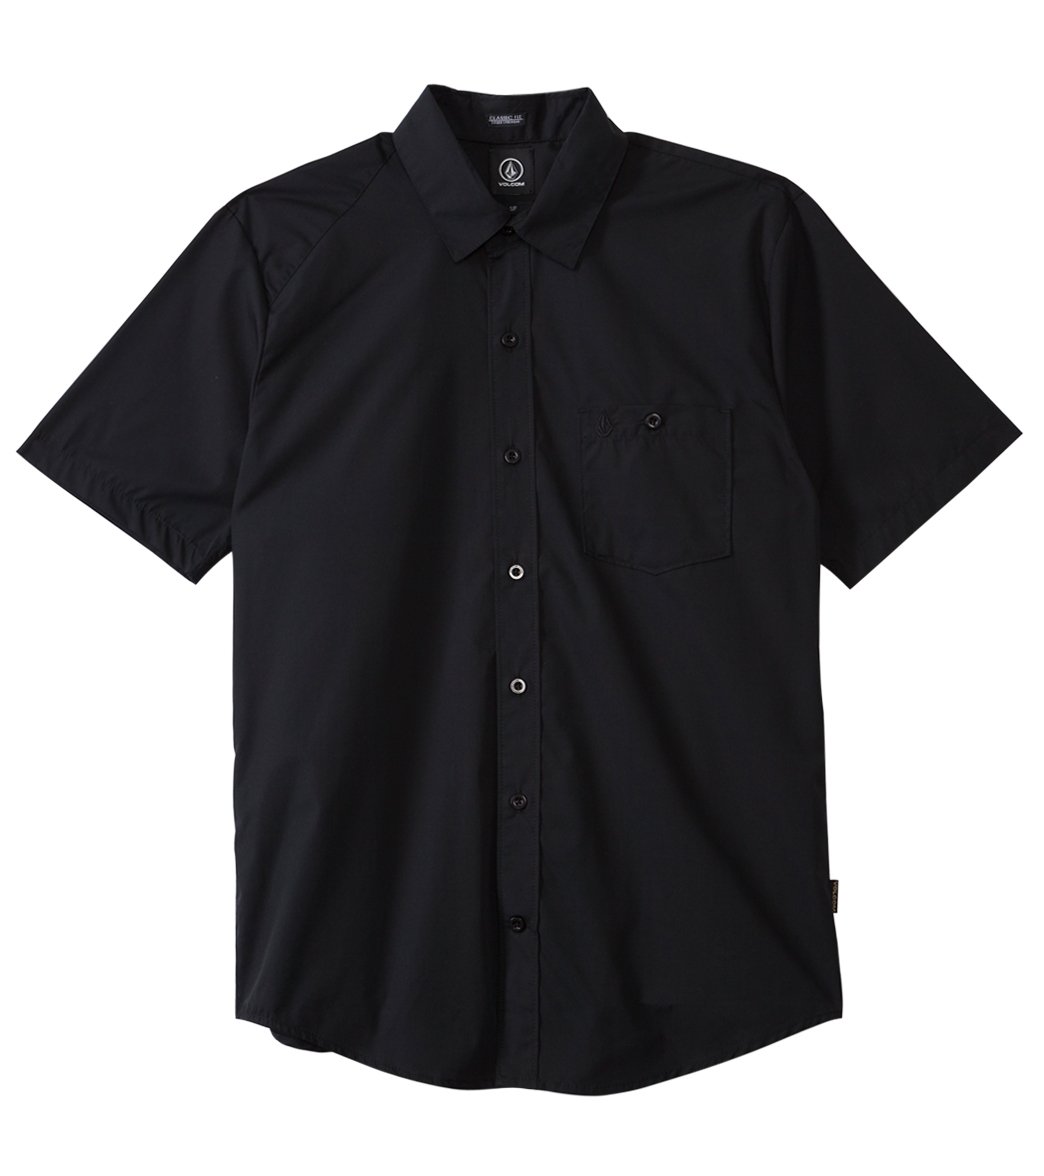 Volcom Men's Everett Solid Short Sleeve Shirt - Black Small Cotton/Polyester - Swimoutlet.com